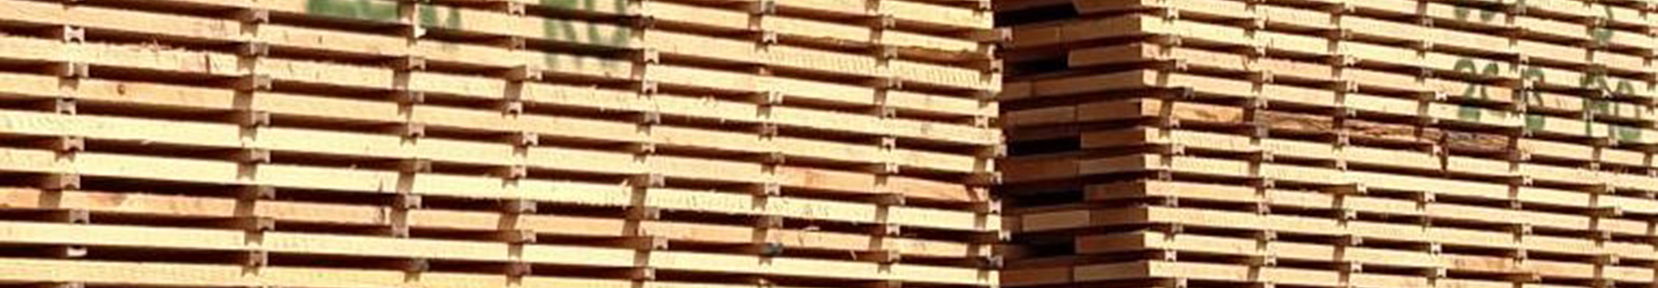 Miller Marquart Lumber